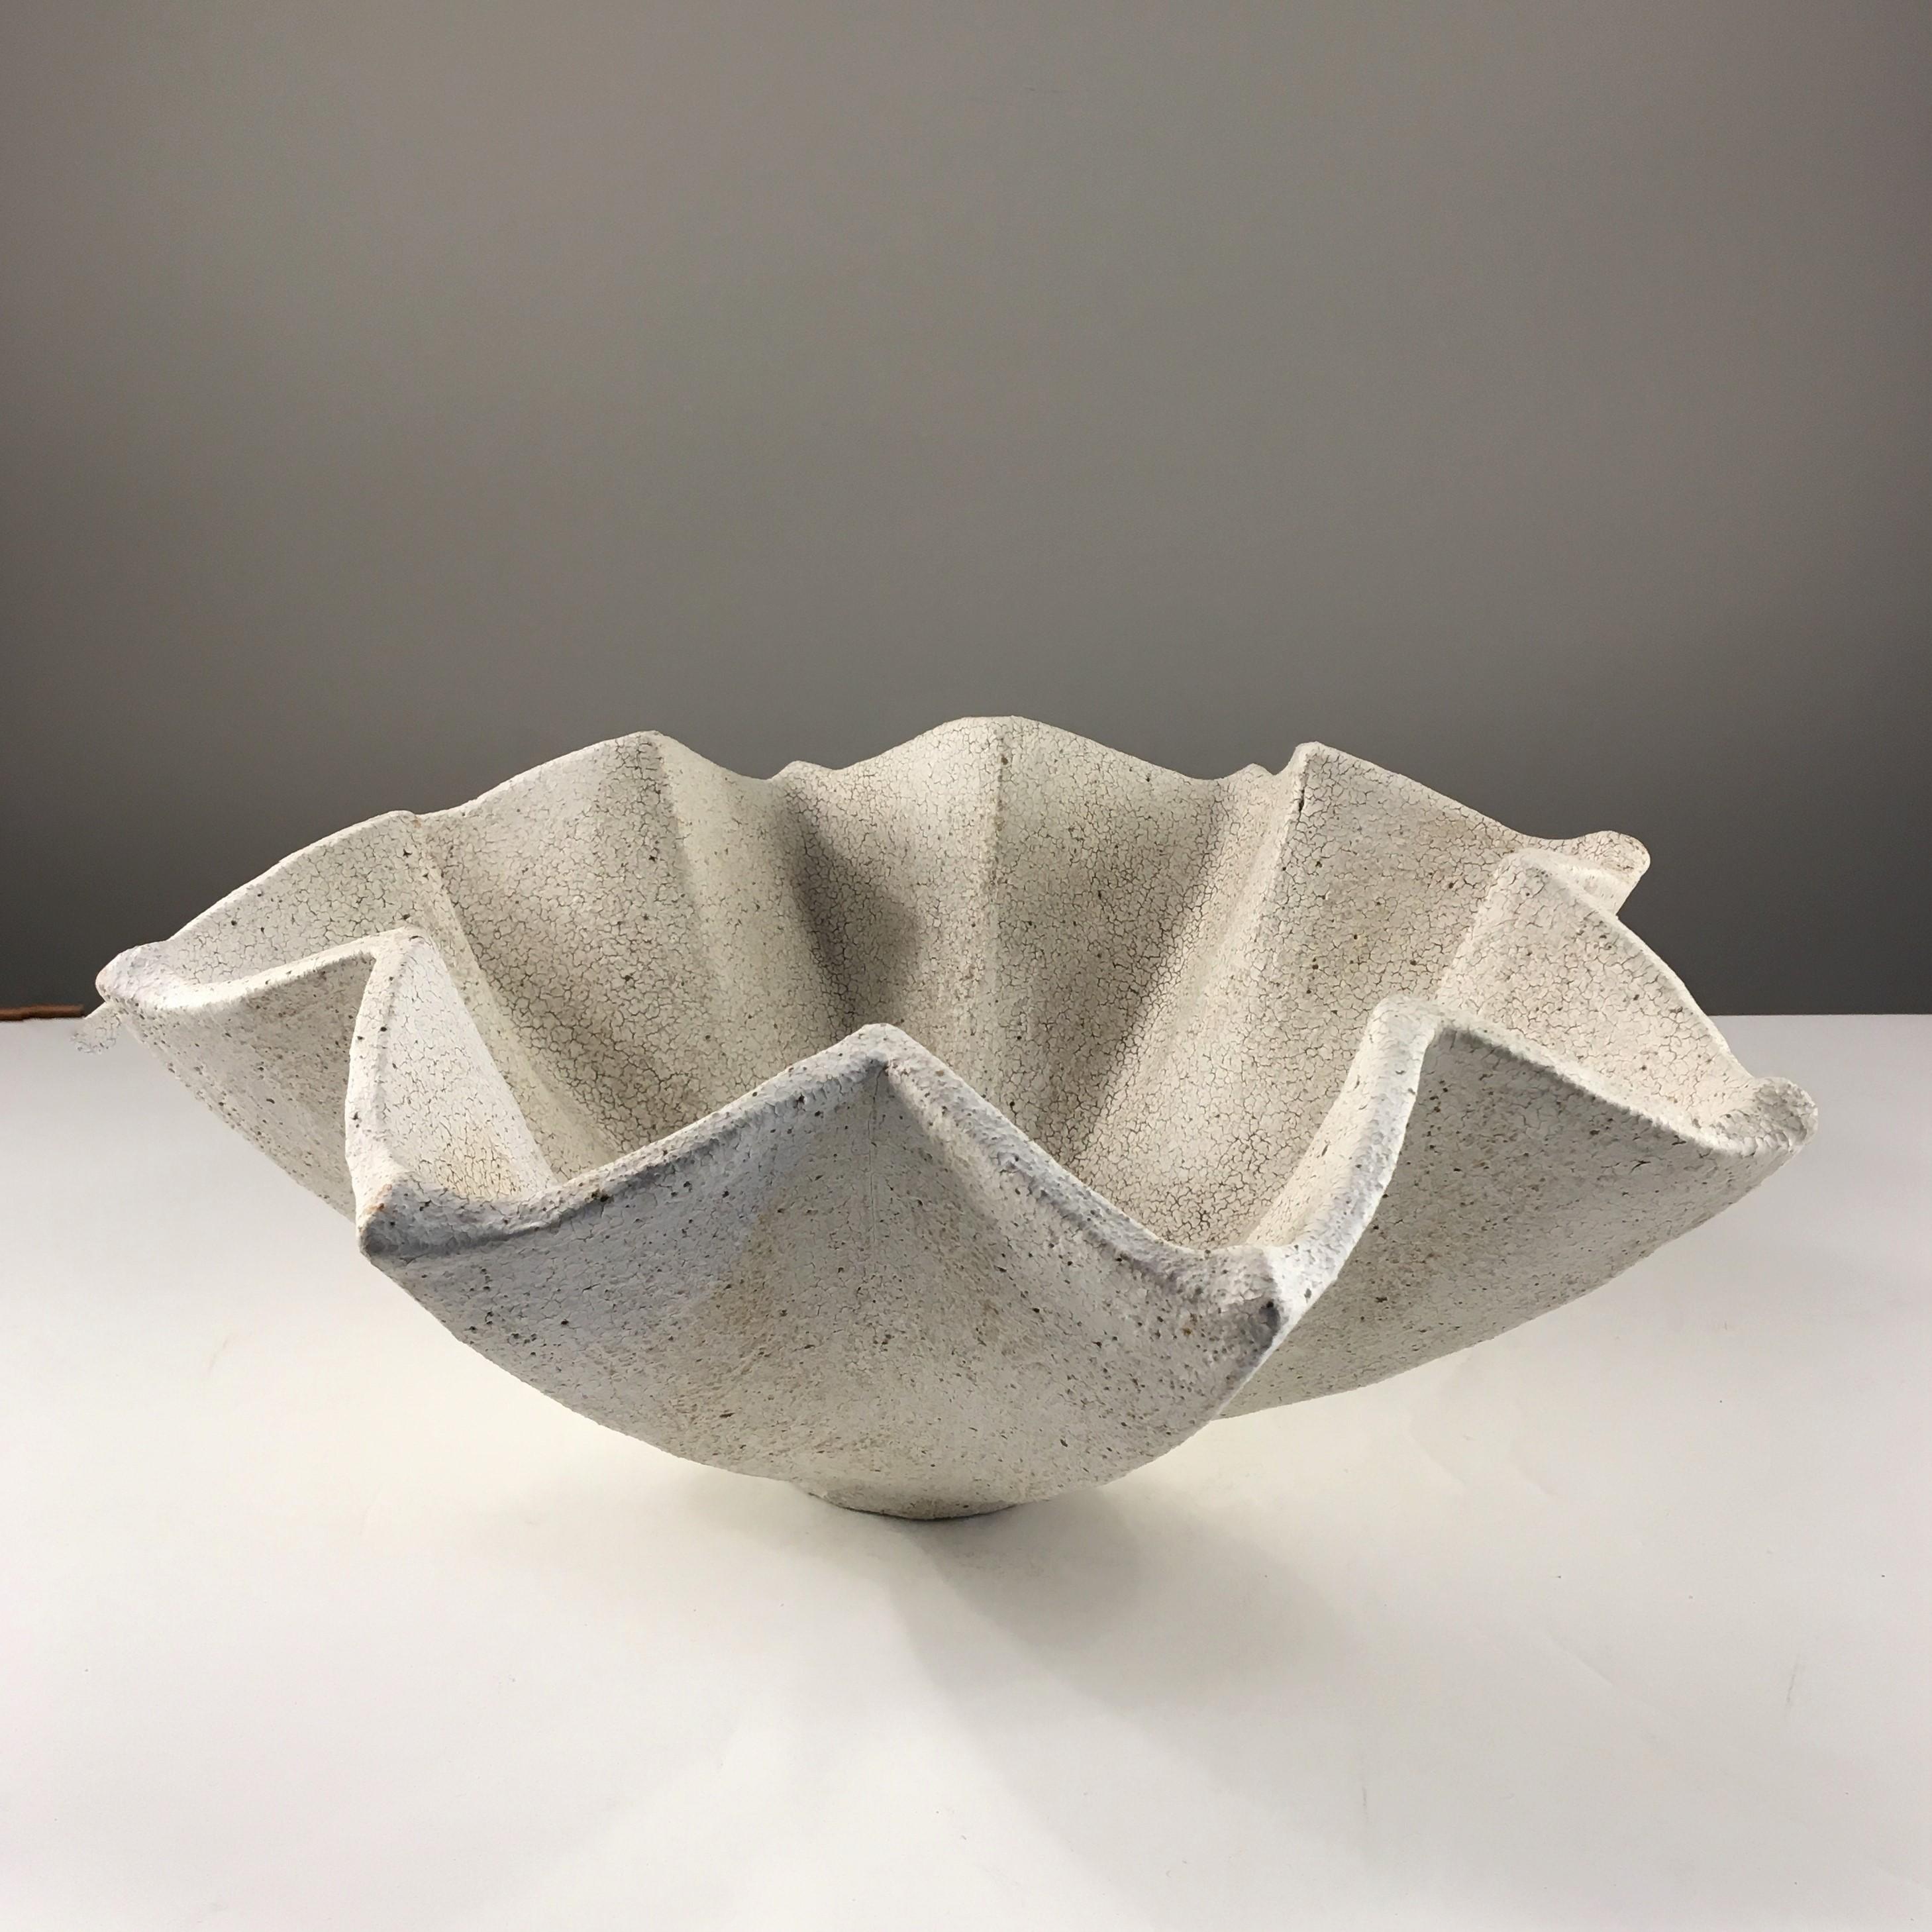 Star Ceramic Bowl by Yumiko Kuga. Dimensions: H 5.5